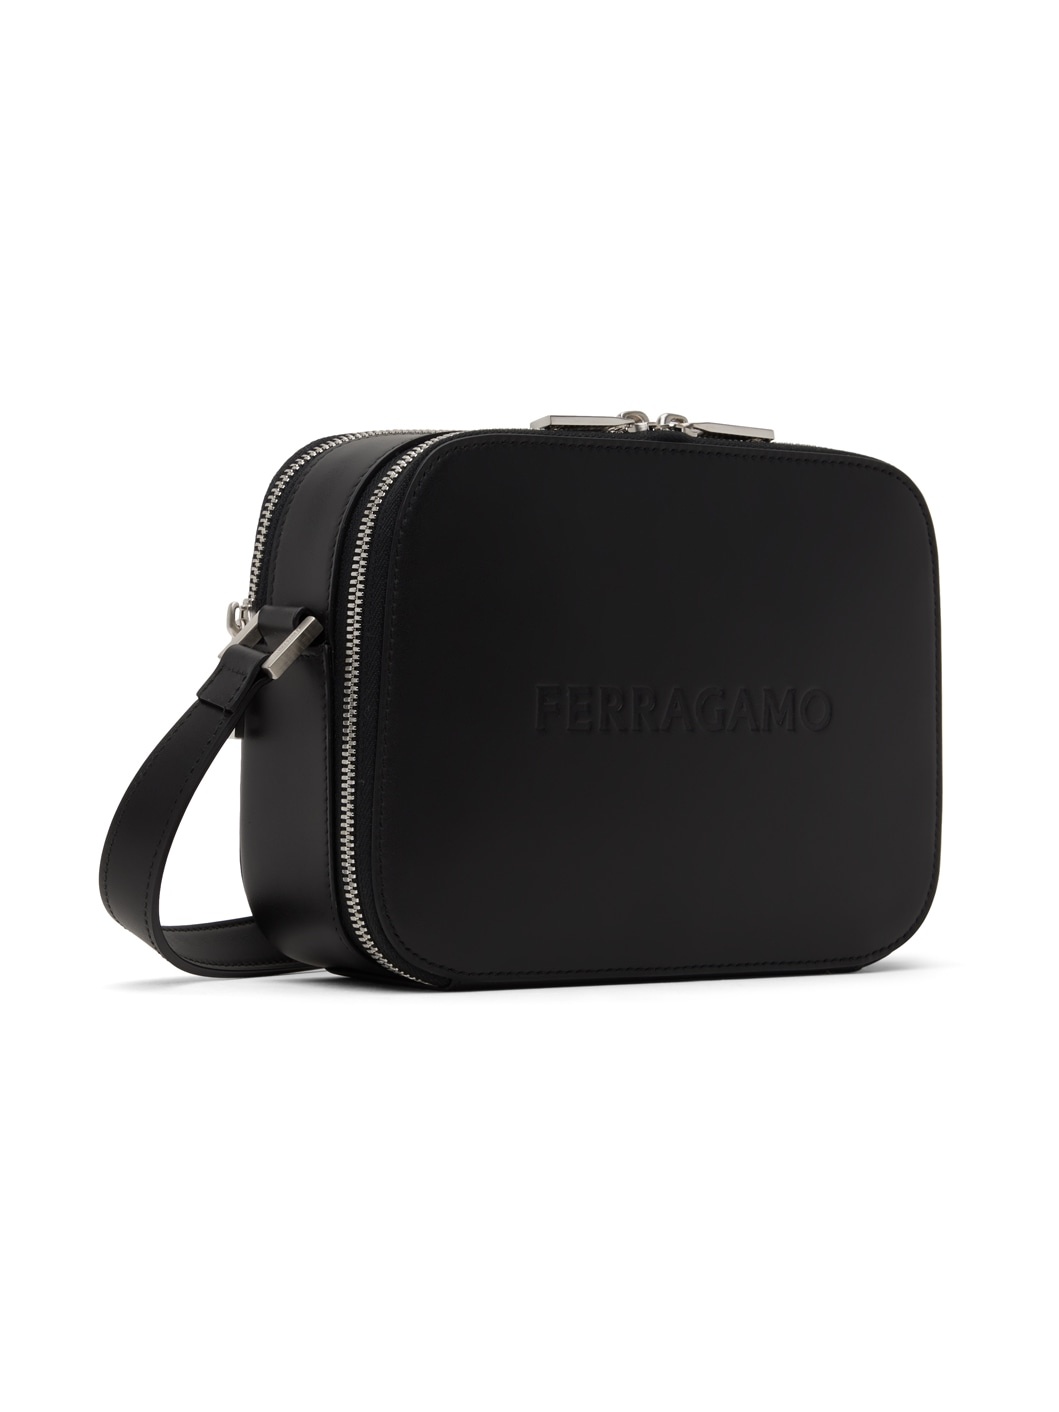 Black Camera Case Bag - 2